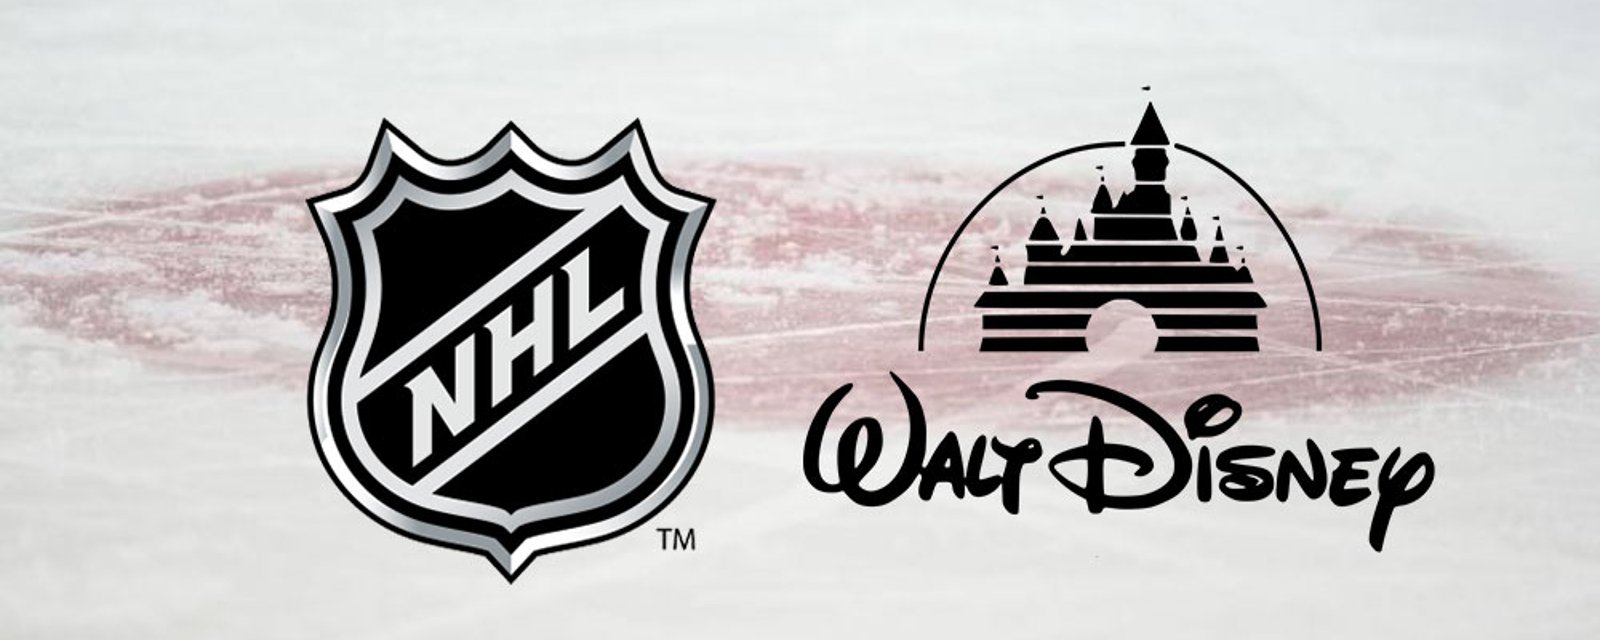 NHL and Disney announce partnership for 2019-20 season